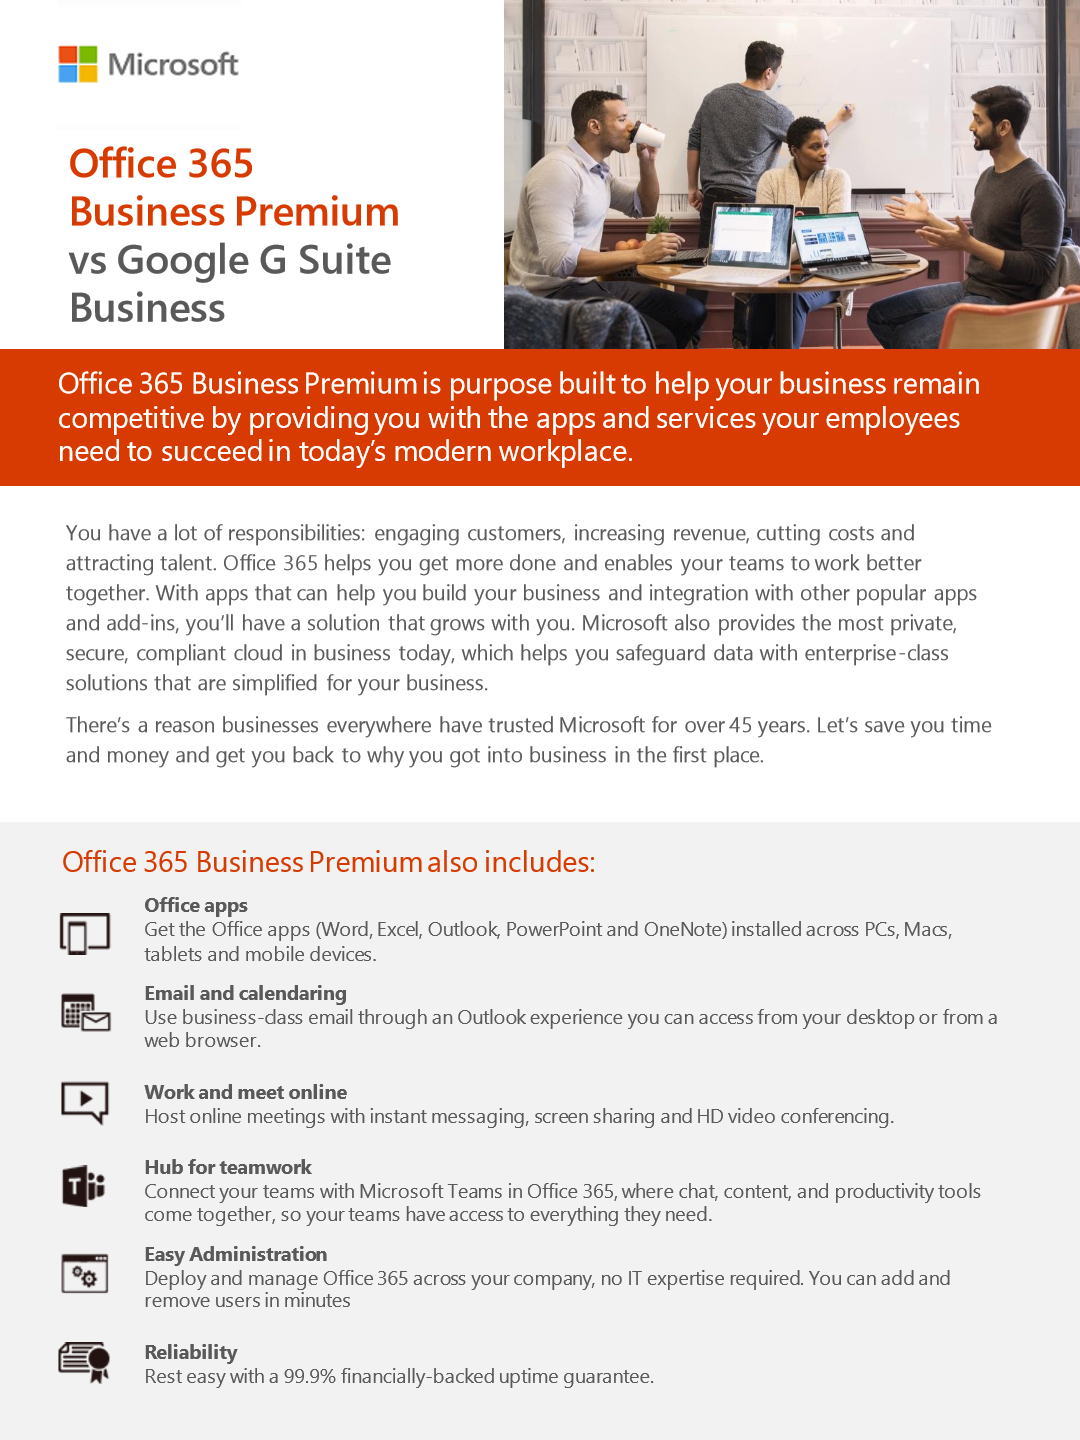 G Suite vs. Business Premium Page 1.jpg